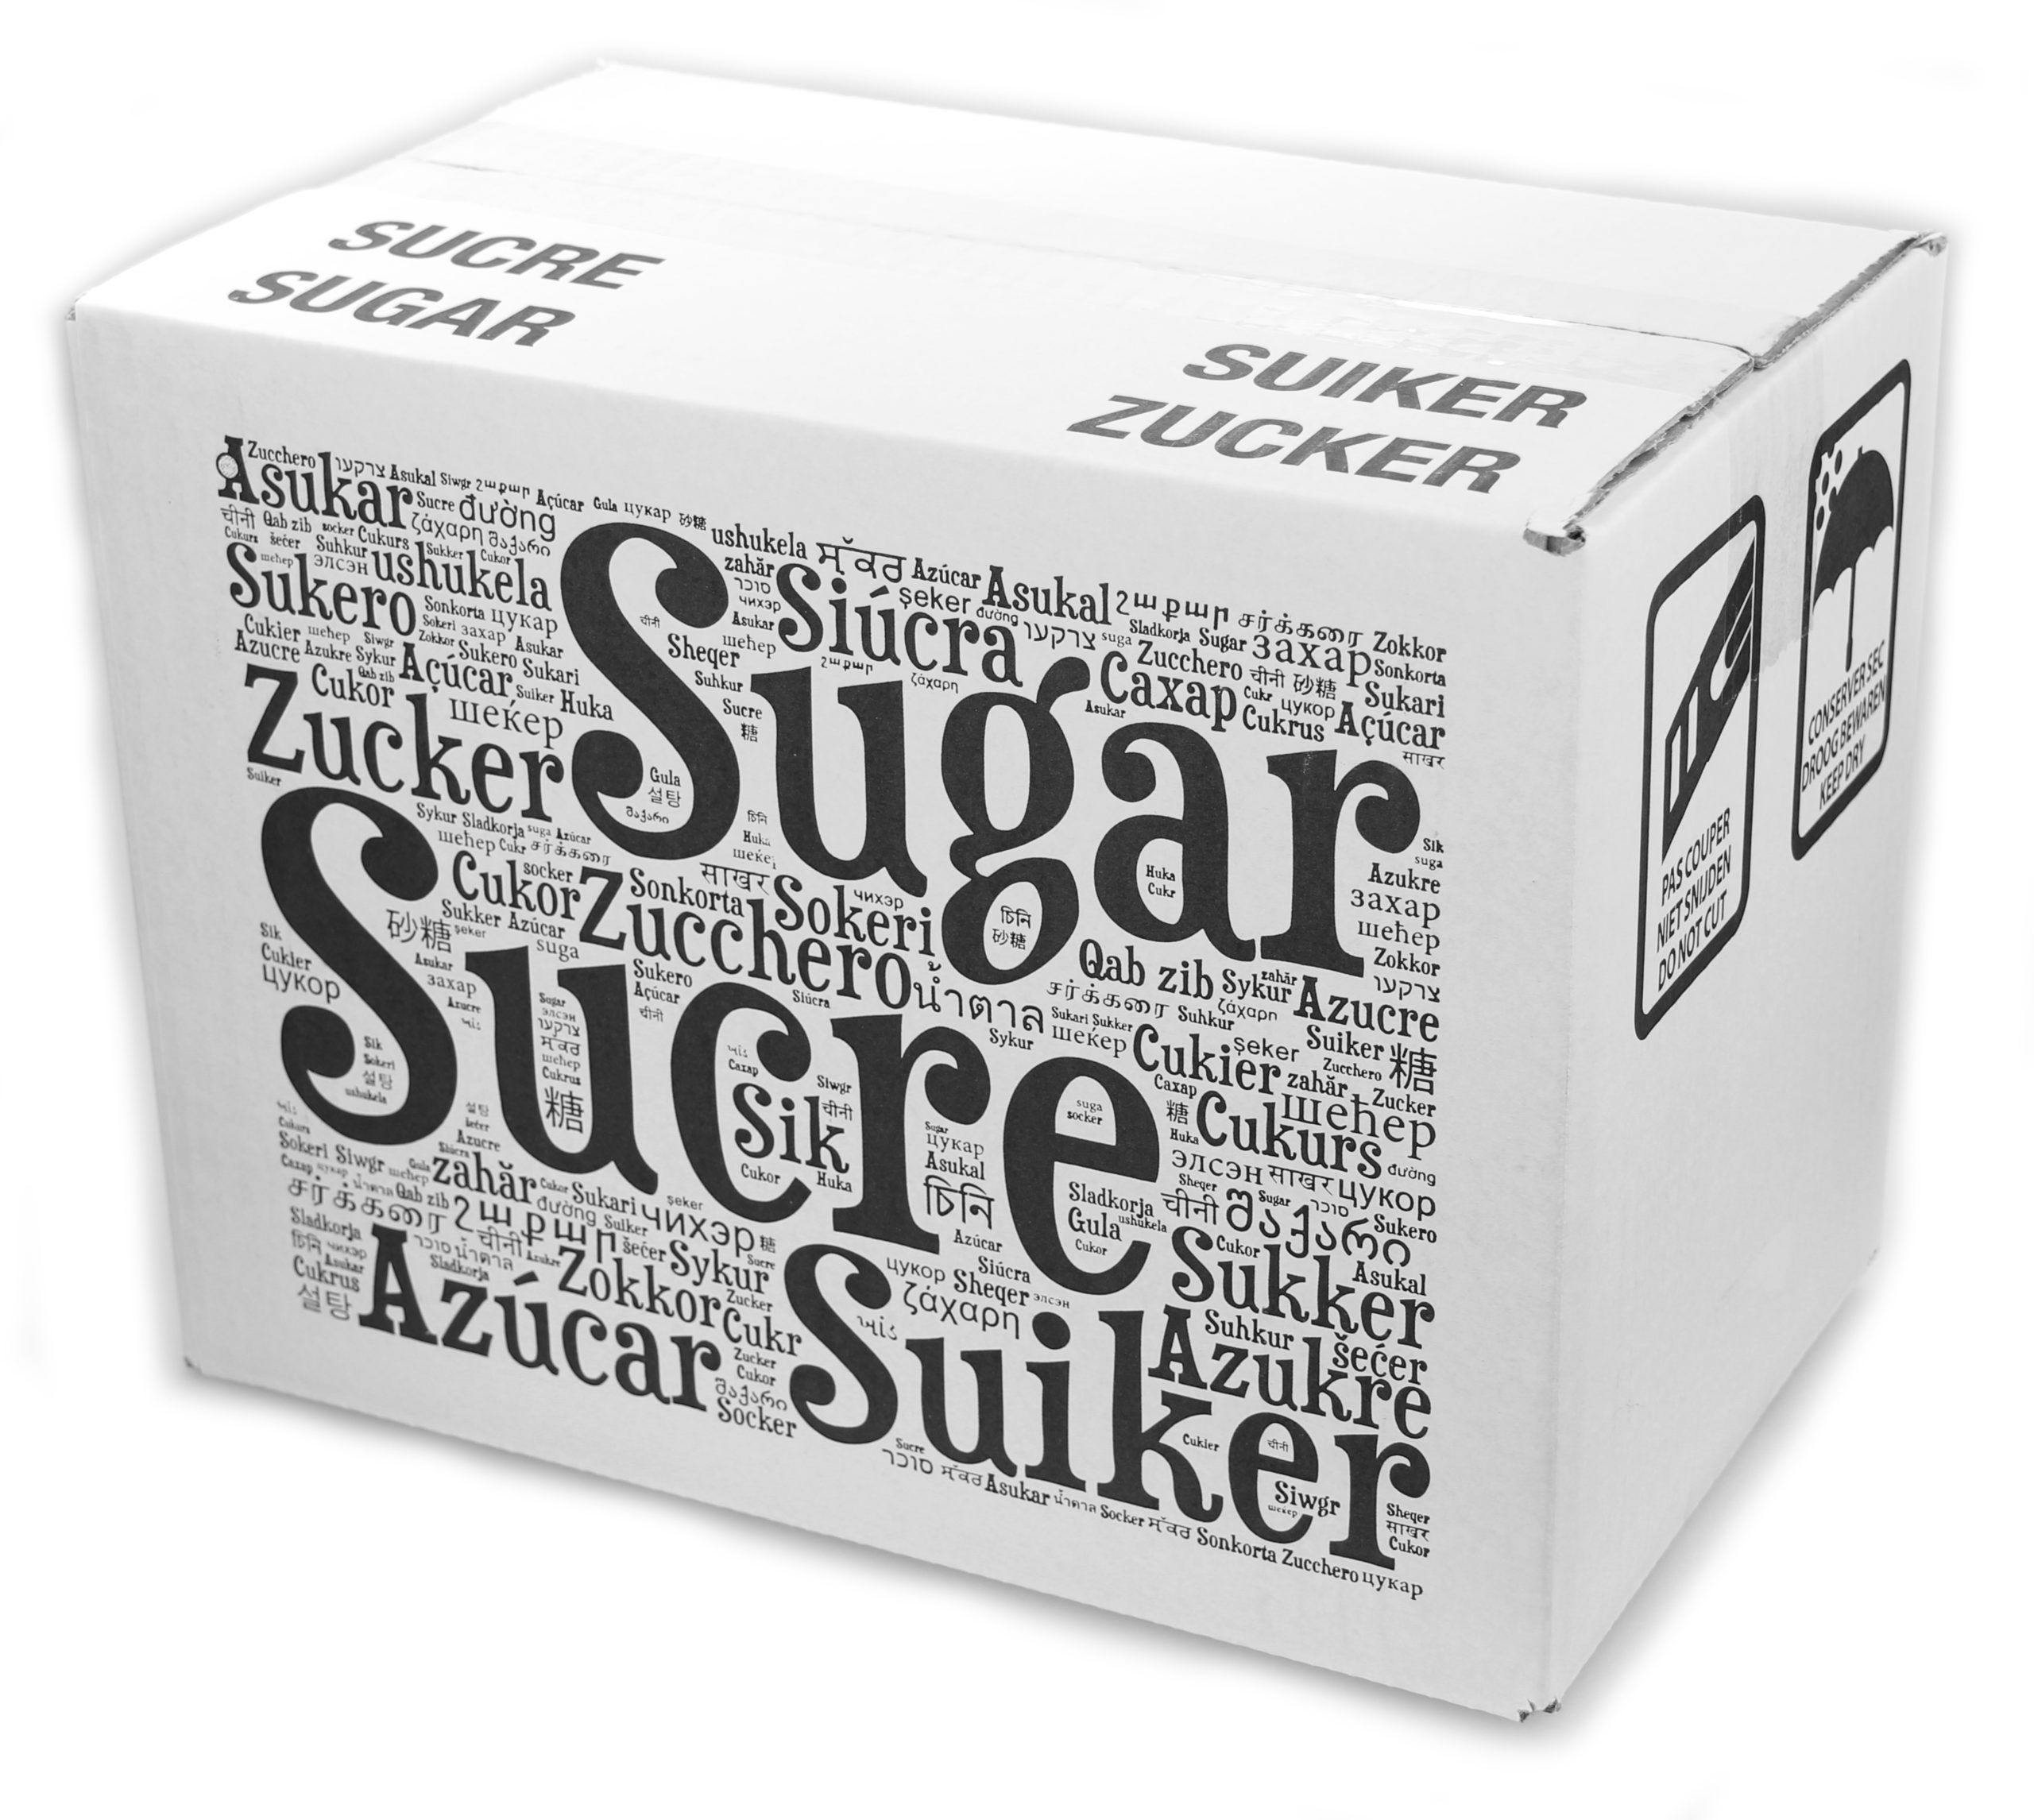 Stick de sucre blanc 4g x 1000